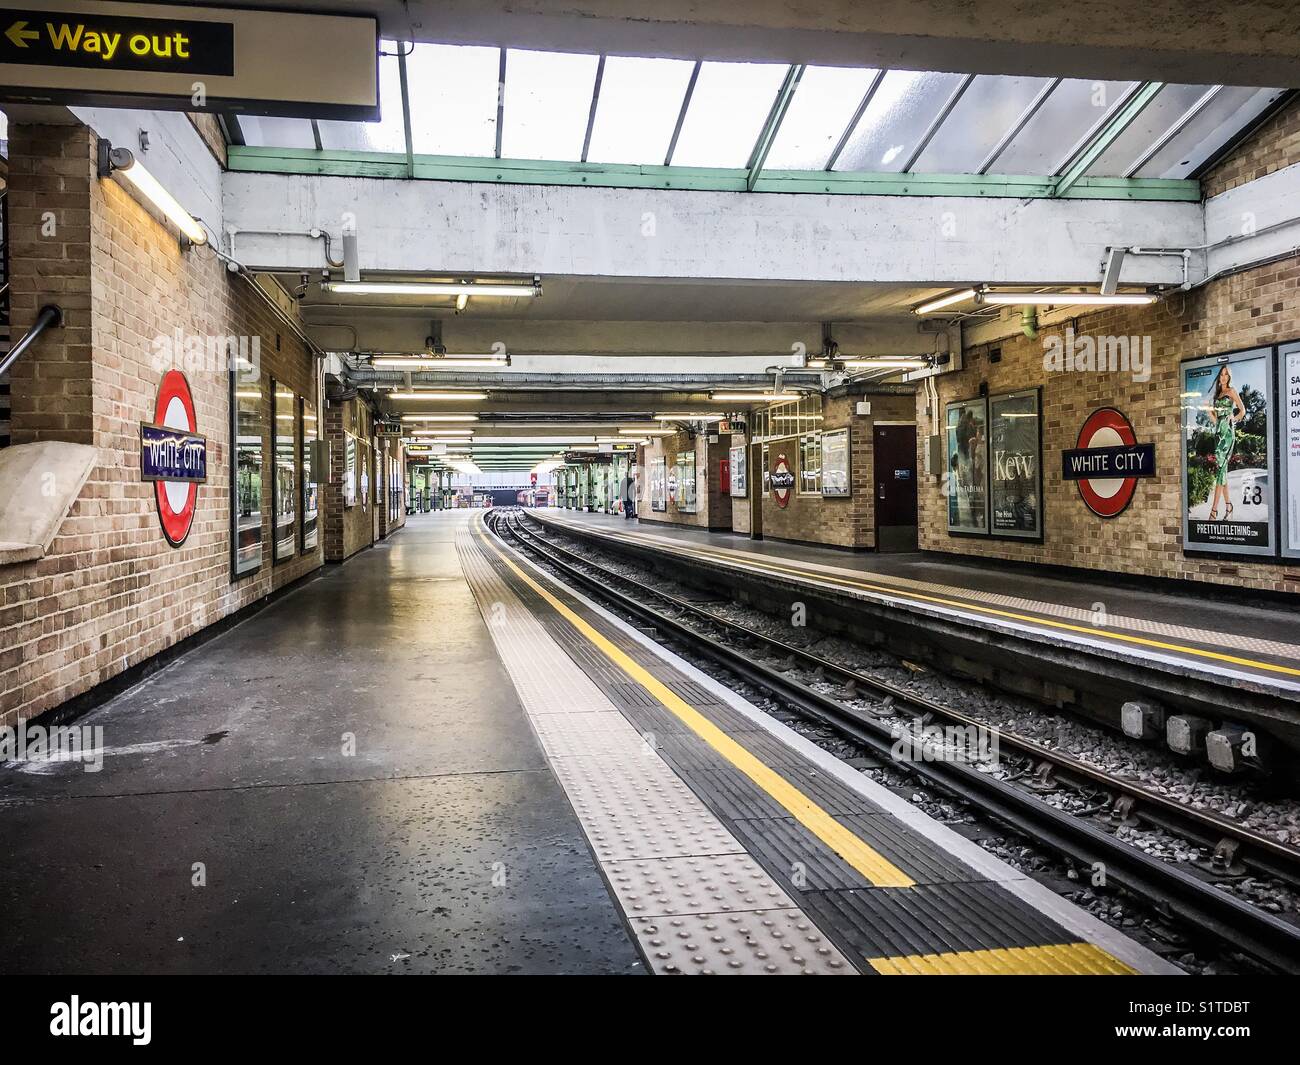 File:White city tube station.jpg - Wikipedia